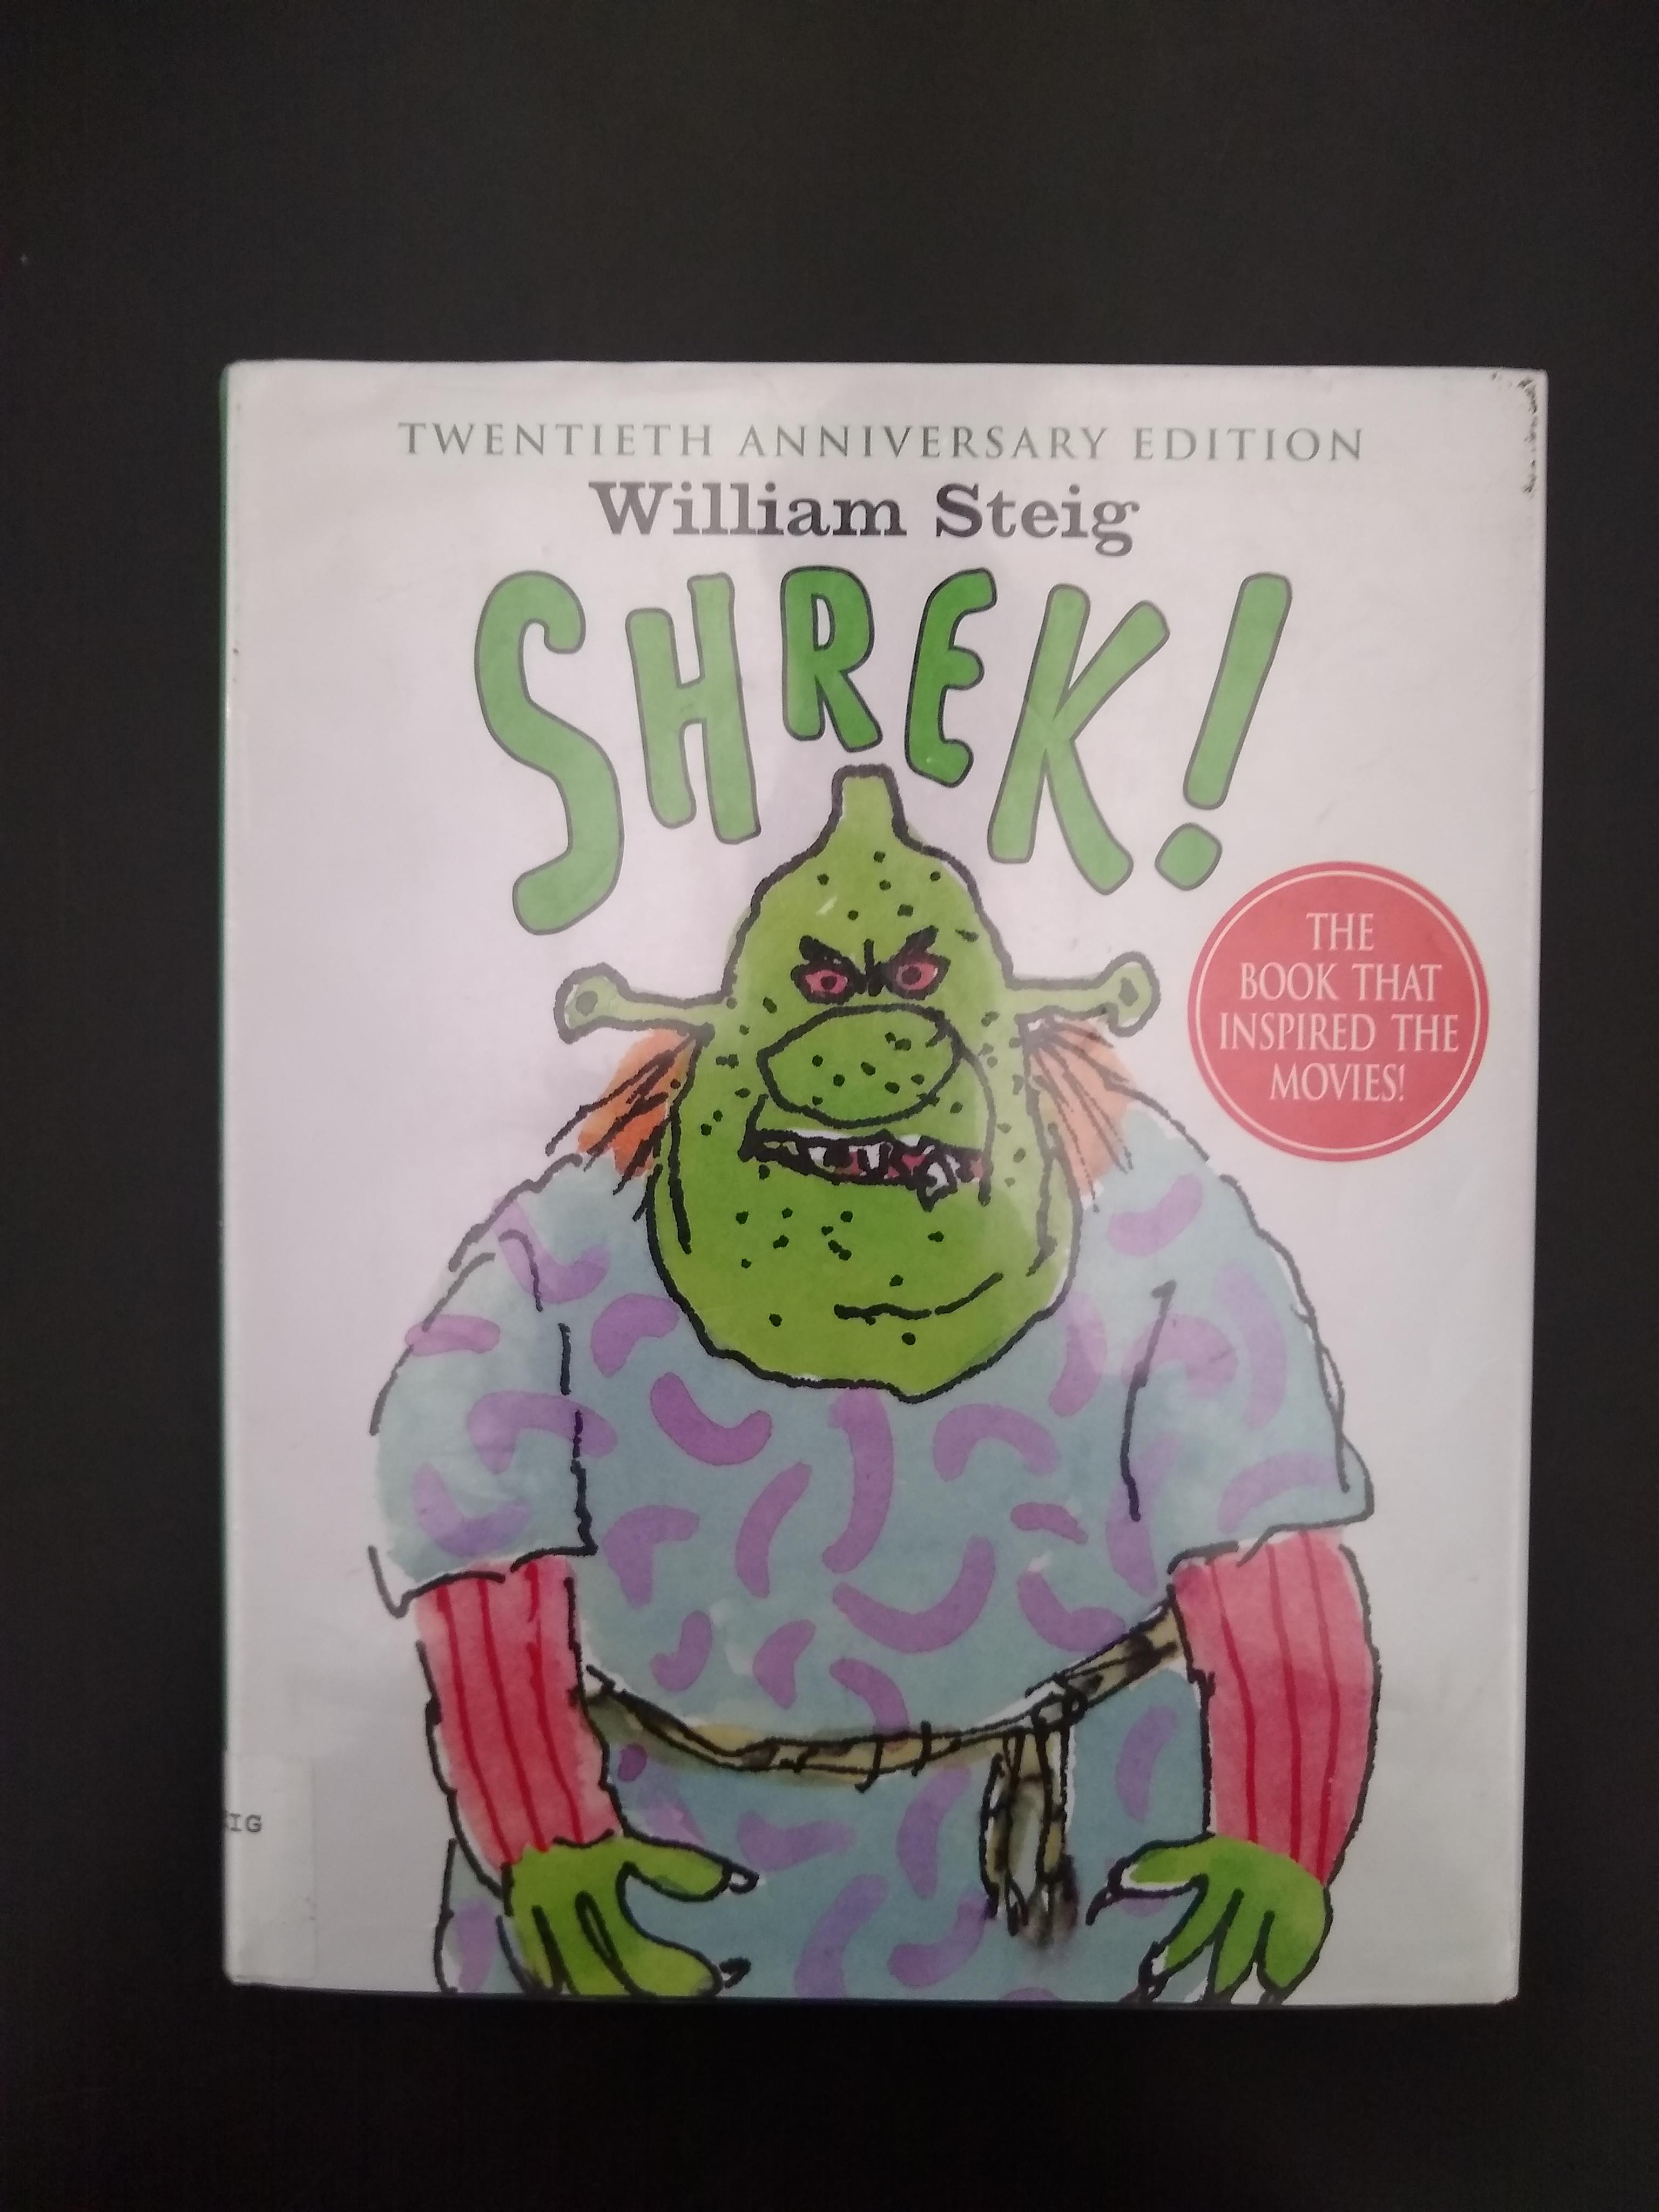 Our Lorde Shrek, an origin story.